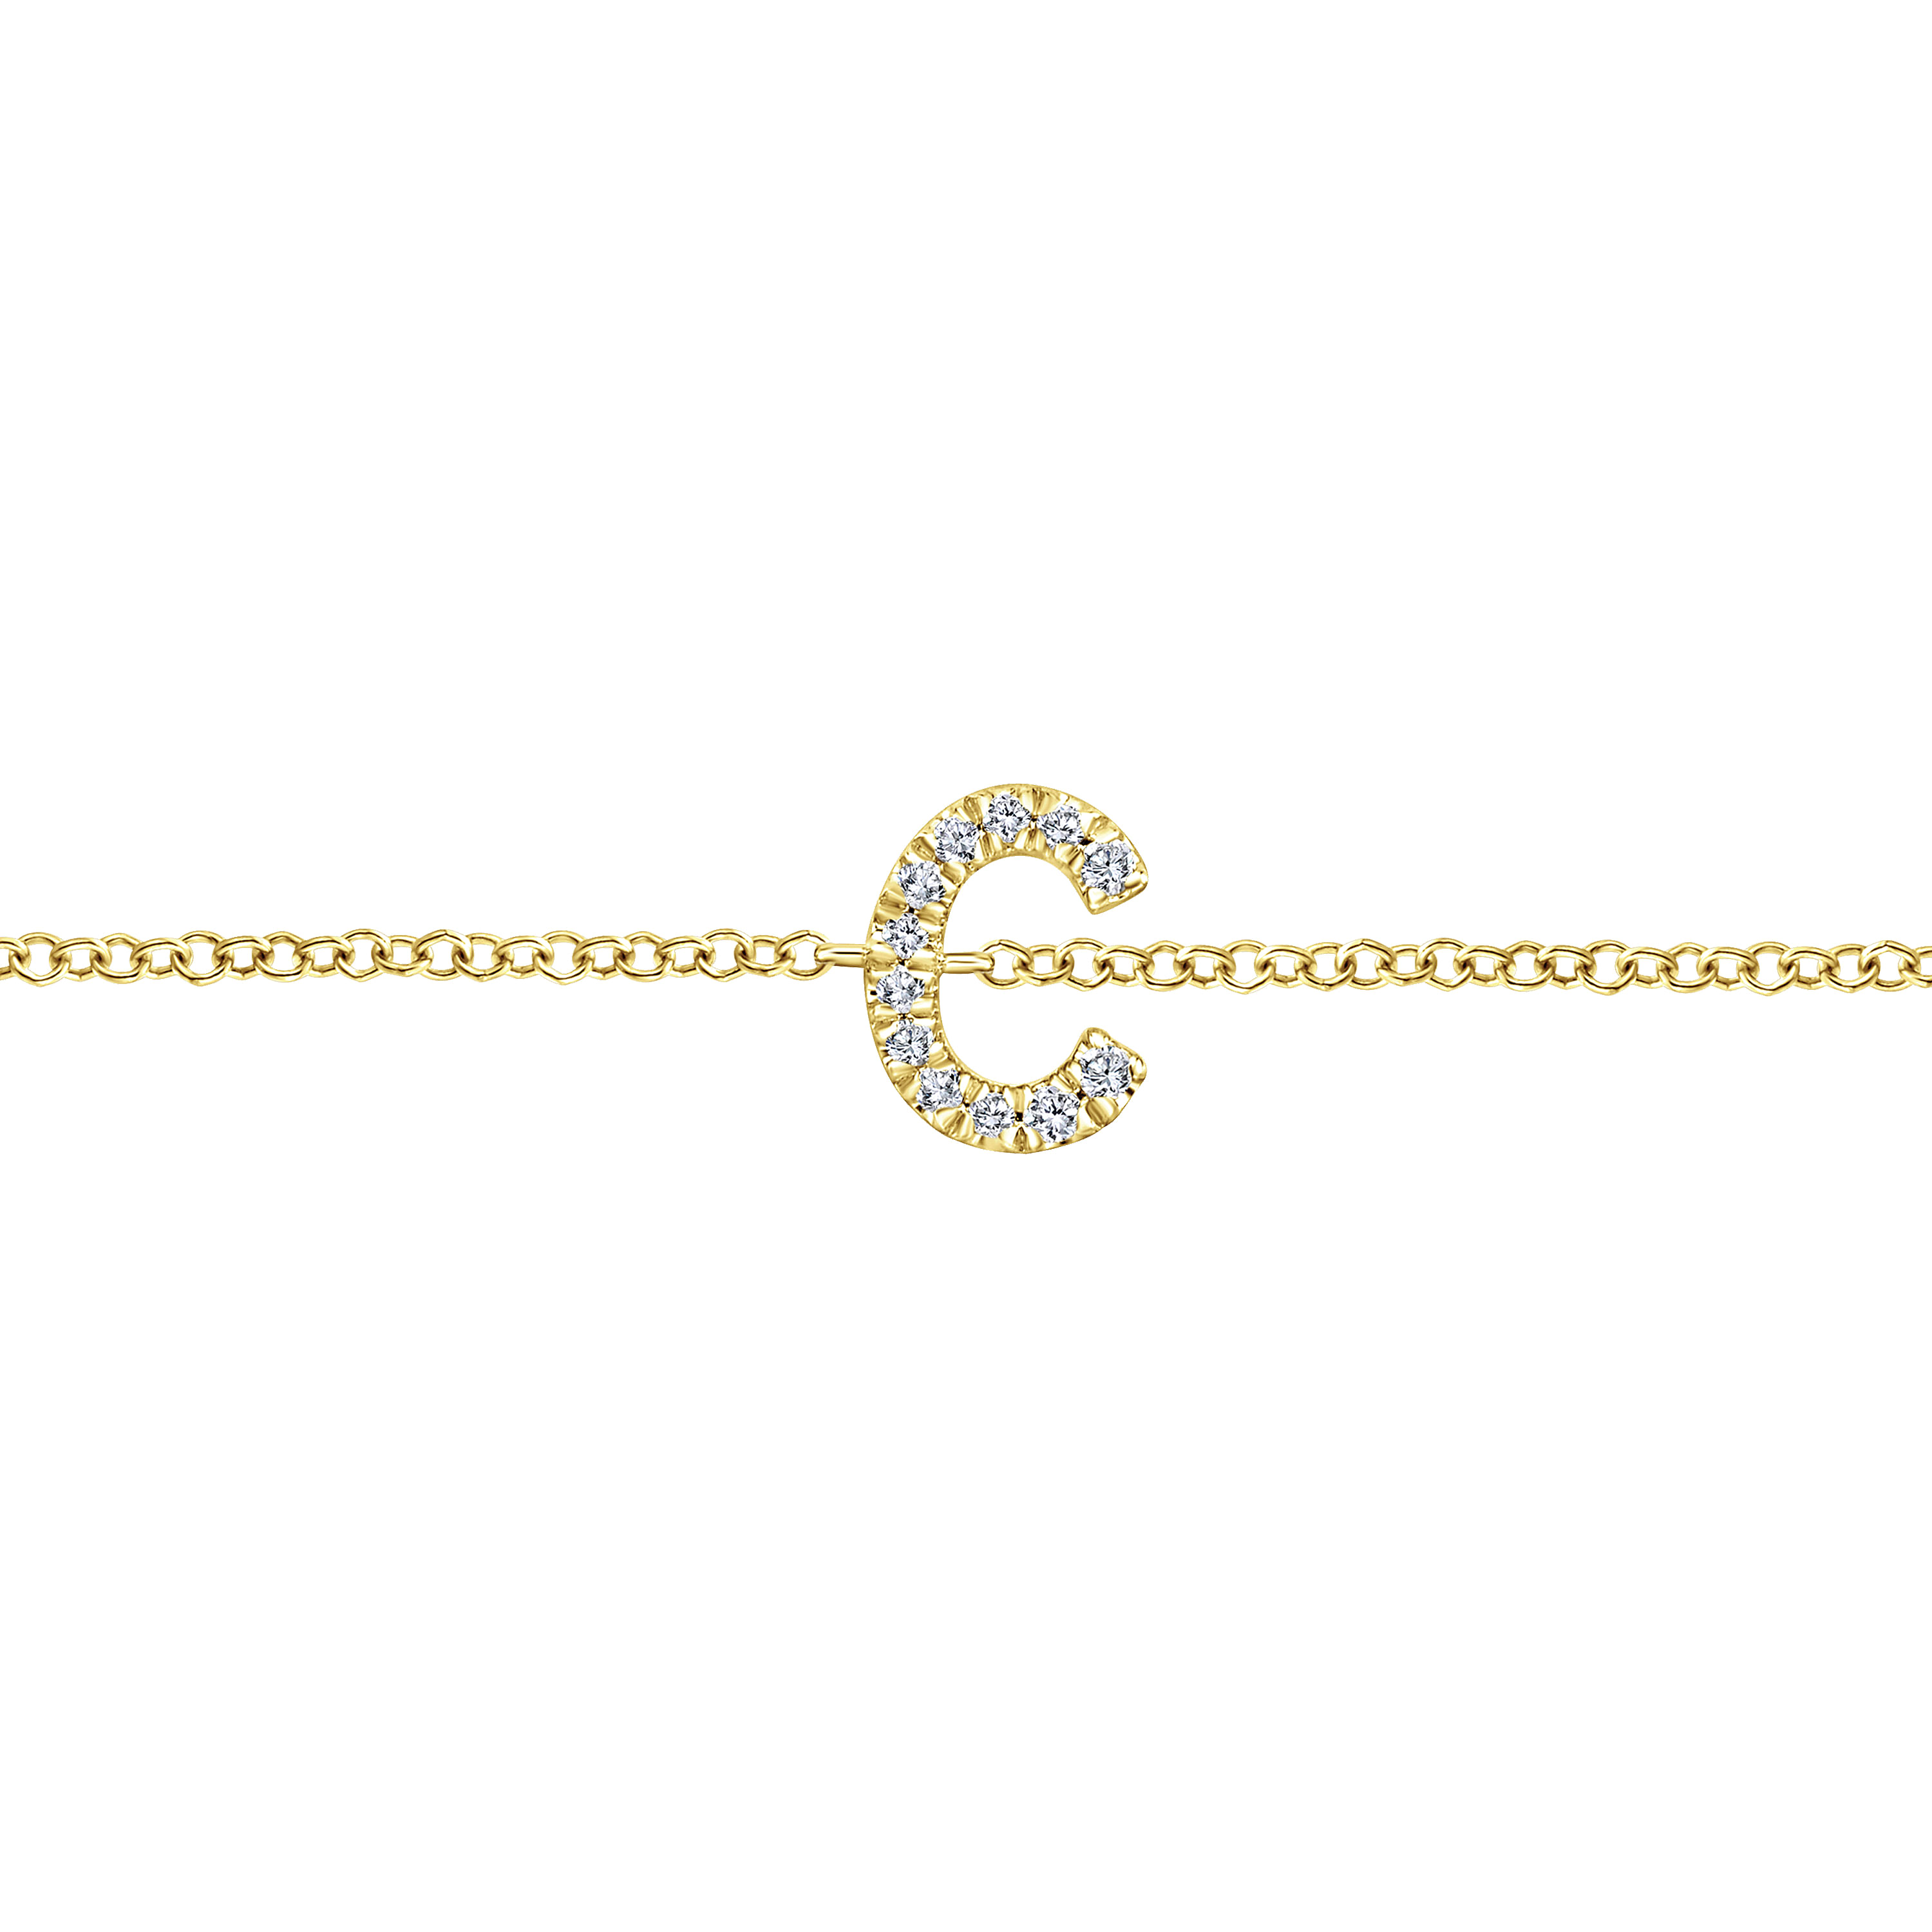 14K Yellow Gold Chain Bracelet with C Diamond Initial